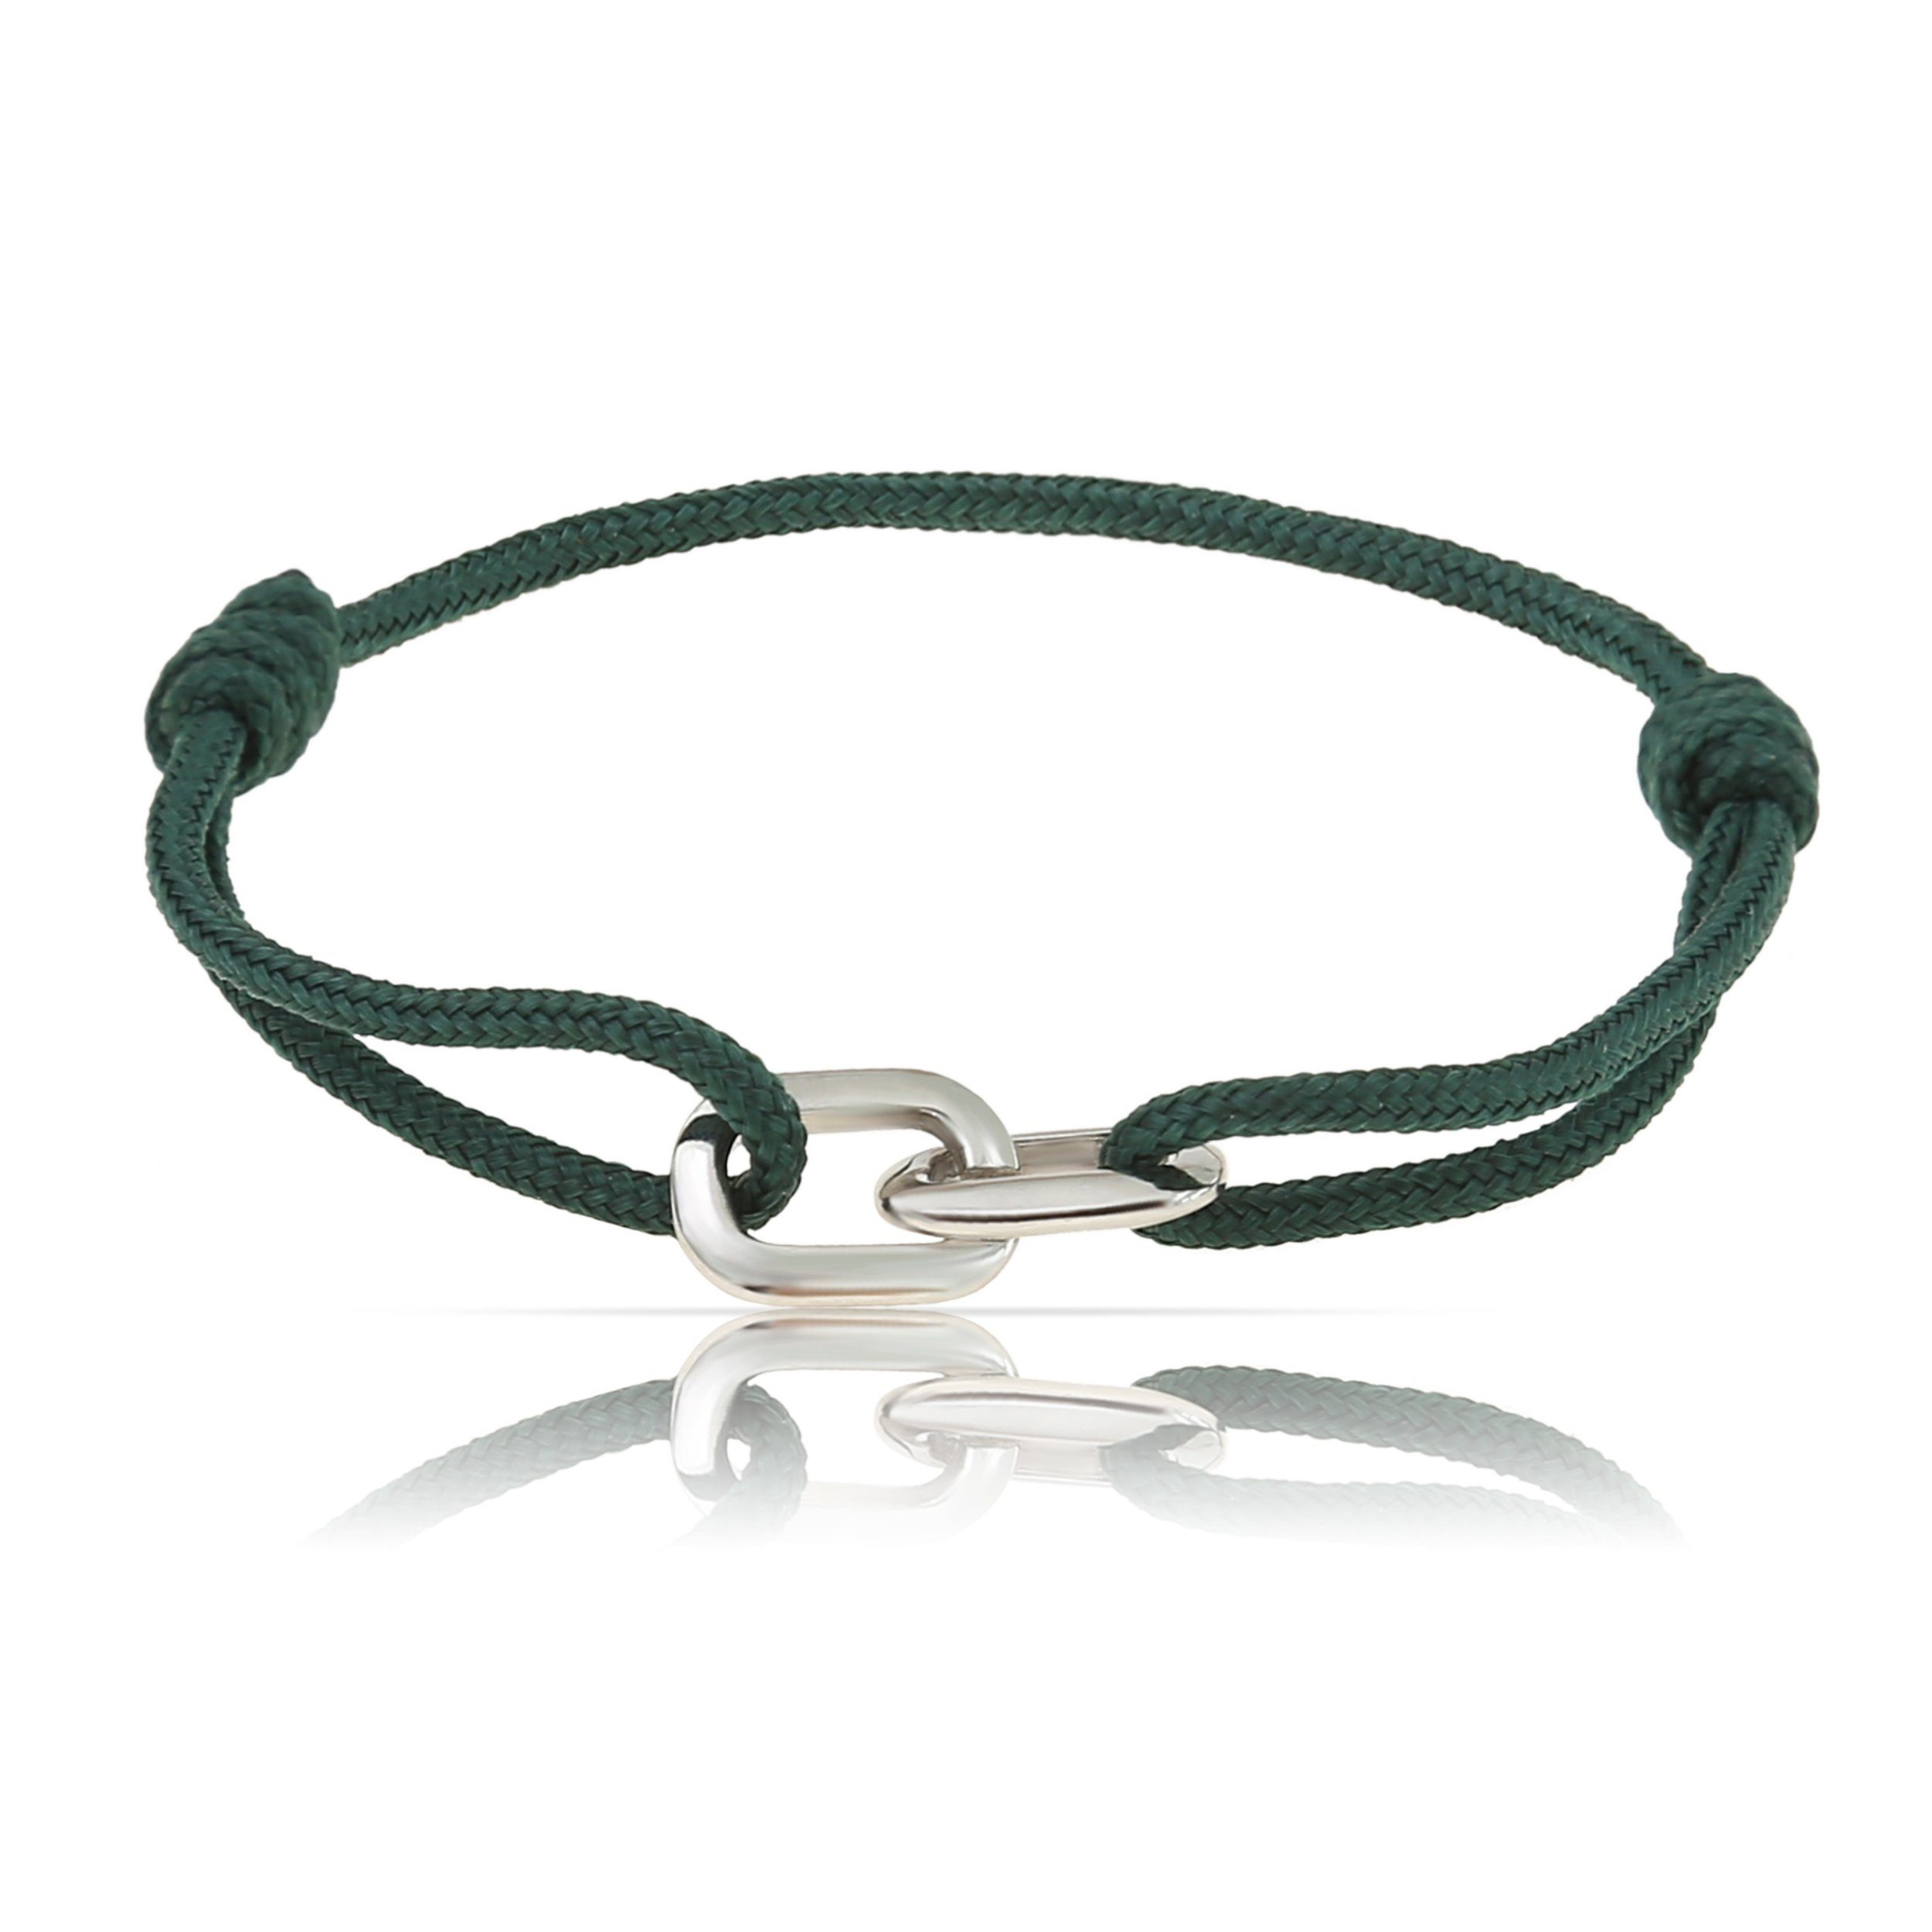 Made by Nami Armband Herren Segeltau Damen Armband Grün Surfer Minimalistisches Verstellbar Armband Smaragd Armband Silber Handgemacht, Wasserfest Armband